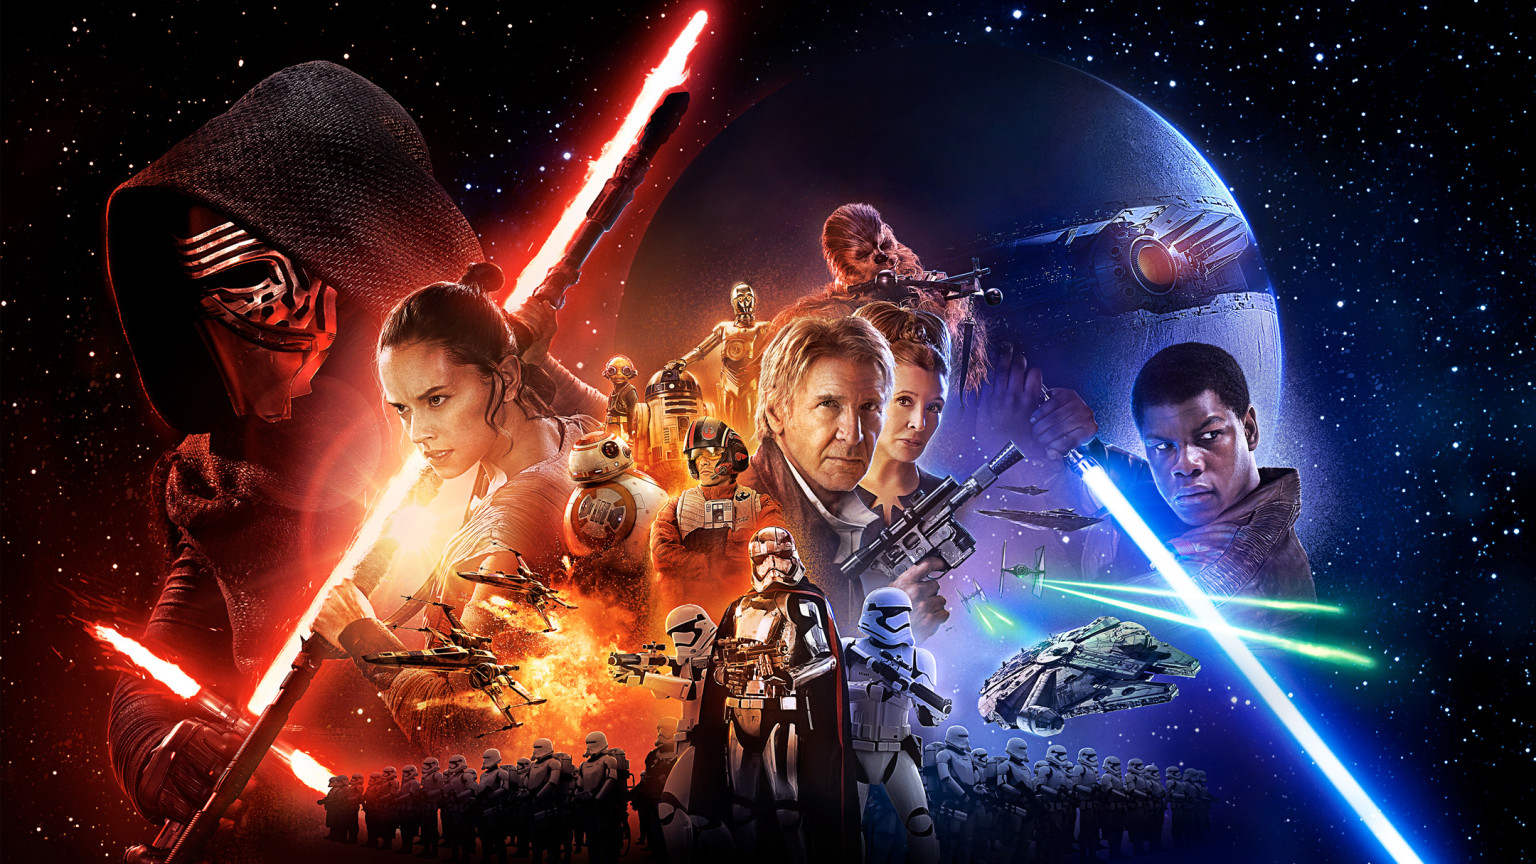 Star Wars Filmlerinden Hafızalara Kazınmış 10 Unutulmaz Sekans 1 – tfa poster wide header 1536x864 324397389357